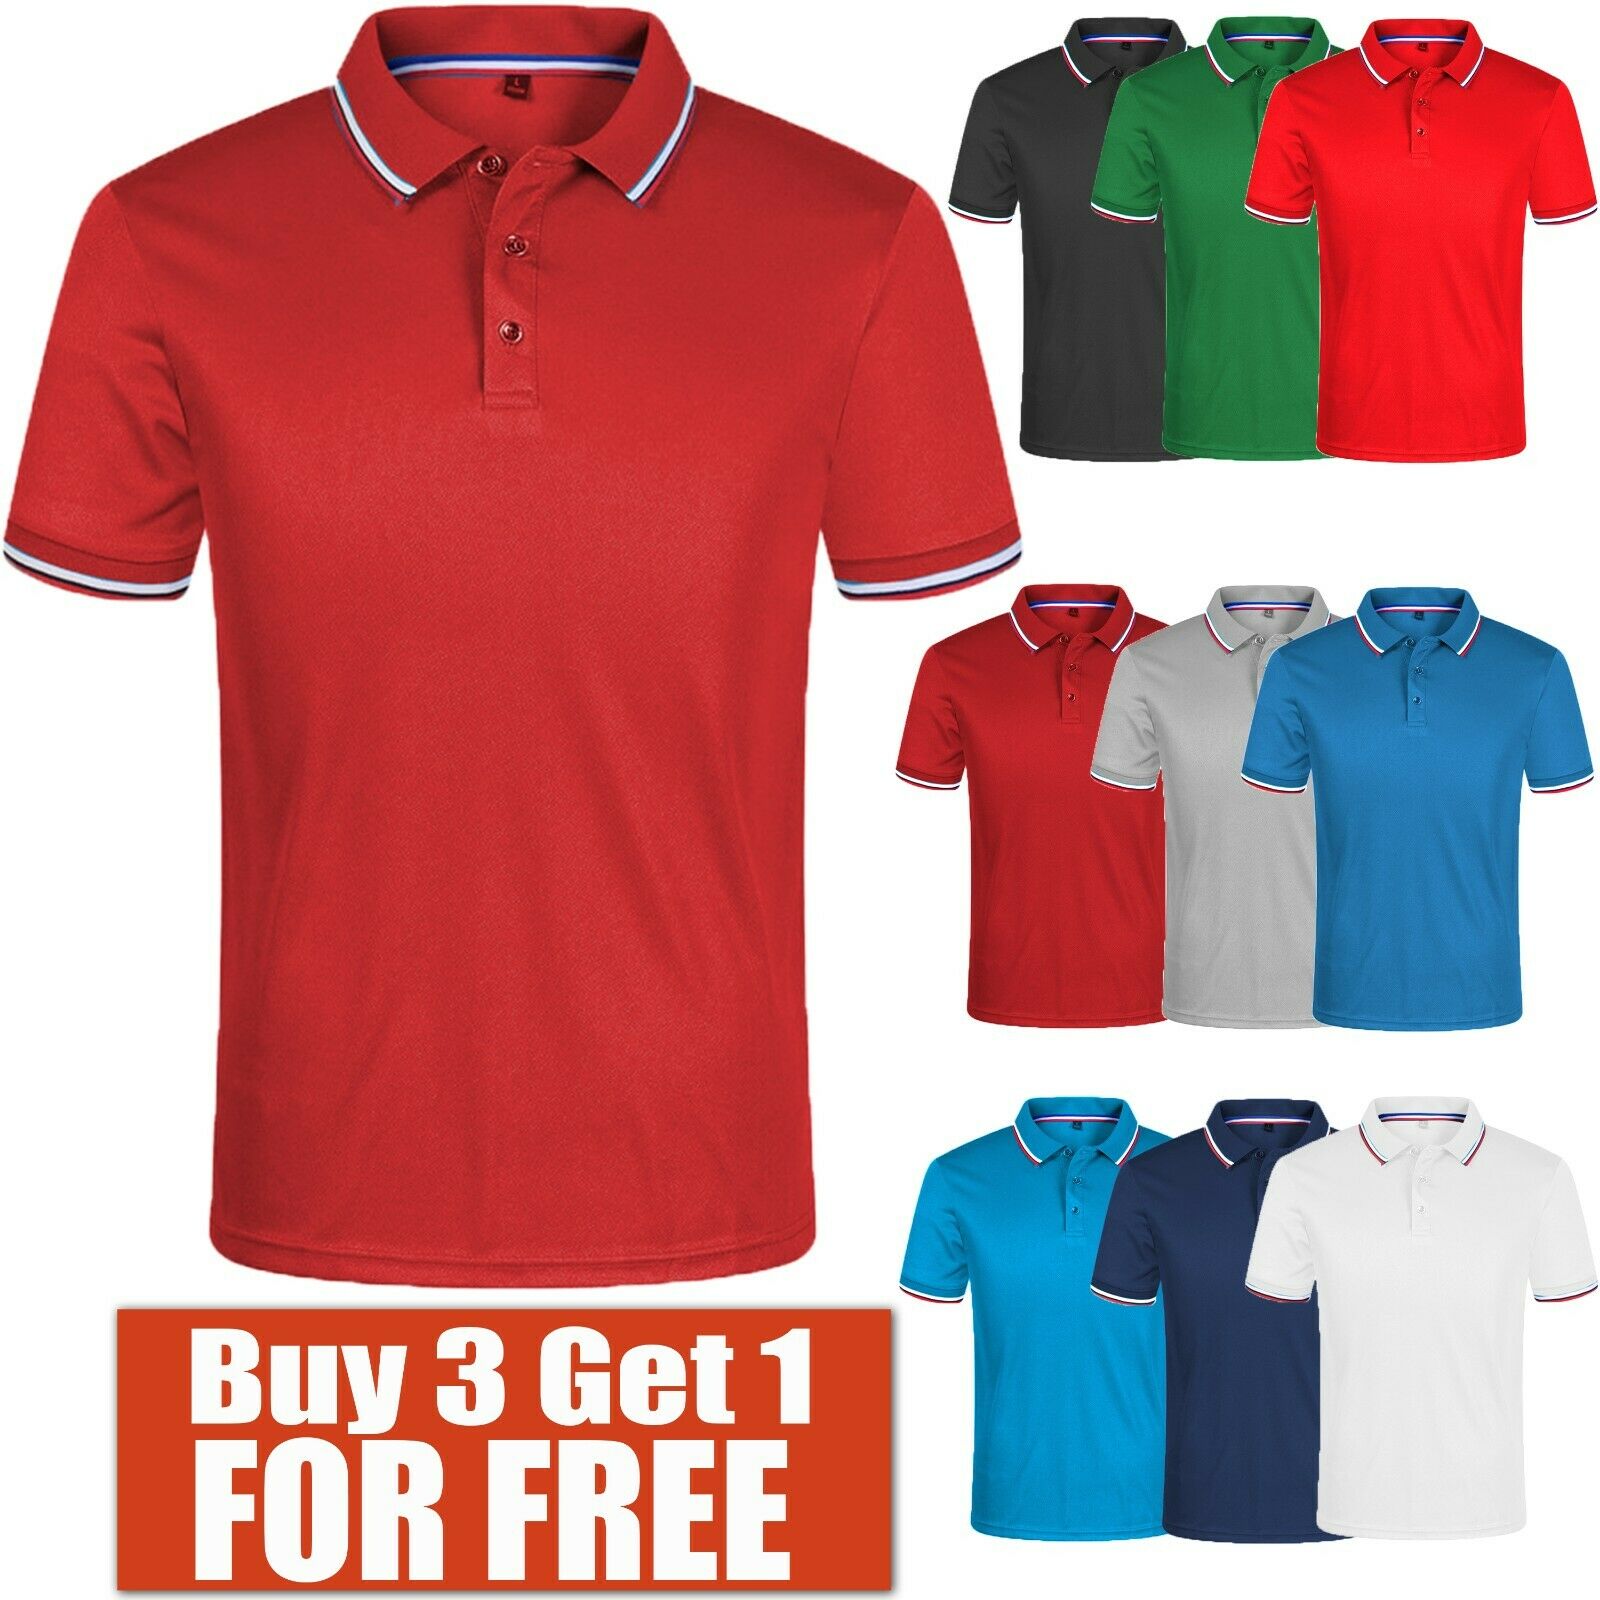 Men's Polo Shirt Dri-fit Golf Sports Cotton T Shirt Jersey Short Sleeve S M L Xl